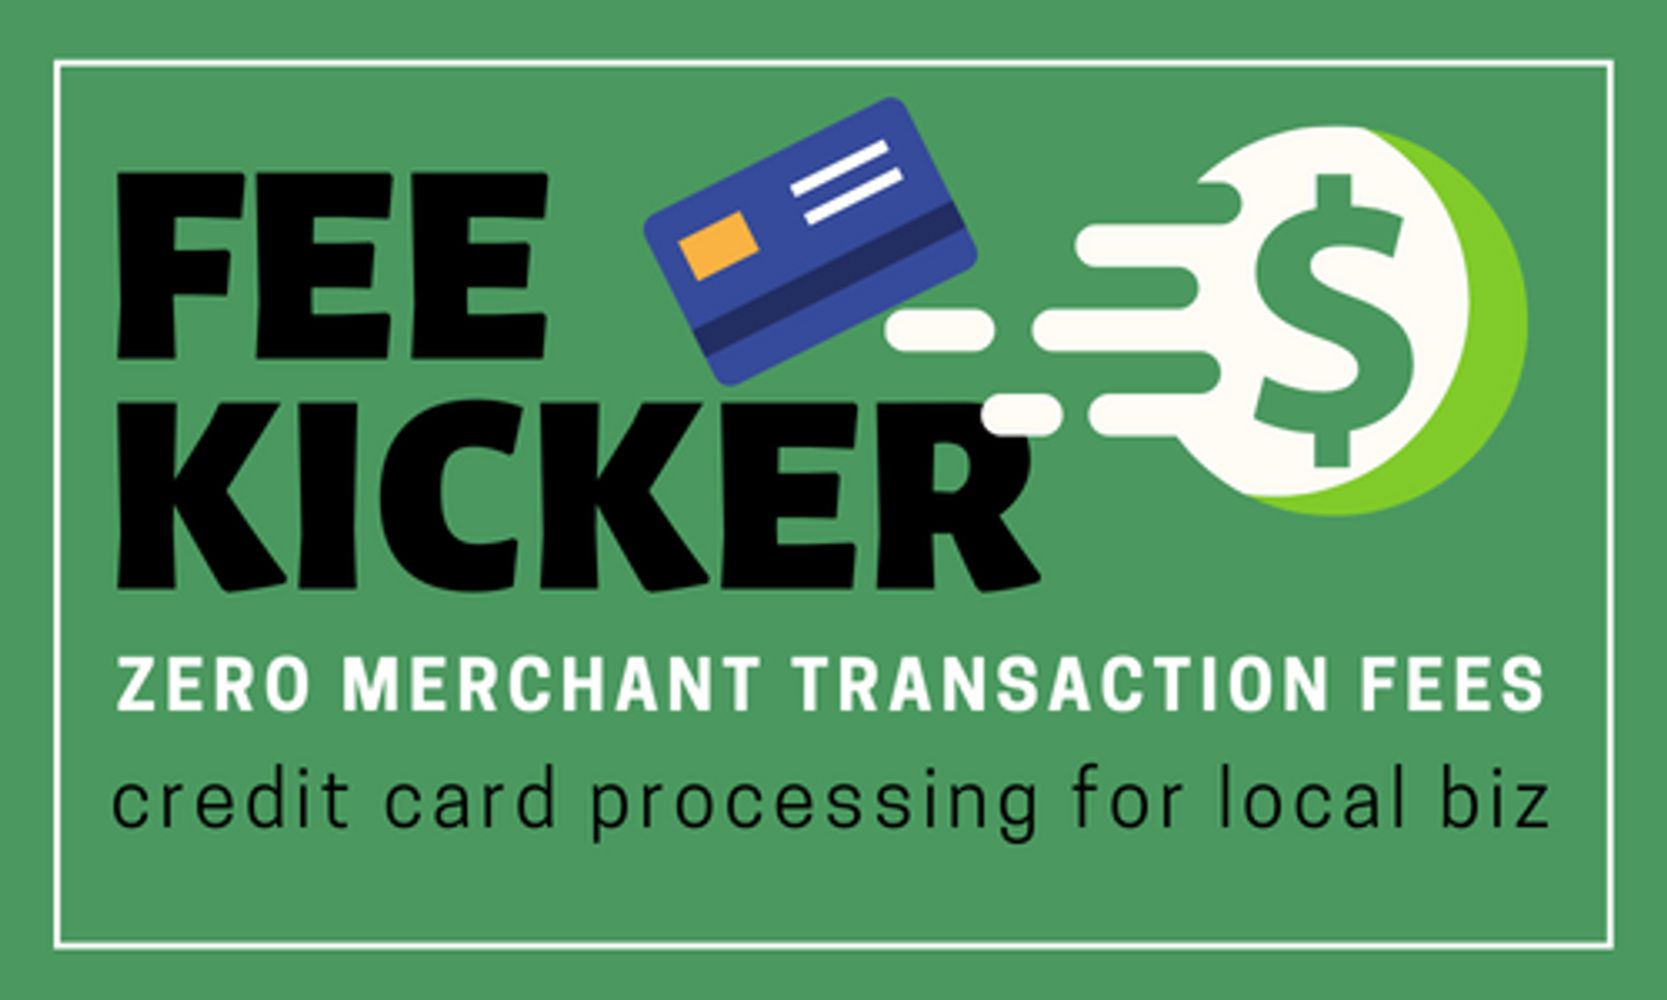 Fee Kicker - Zero Merchant Transaction Fees powered by PayLo